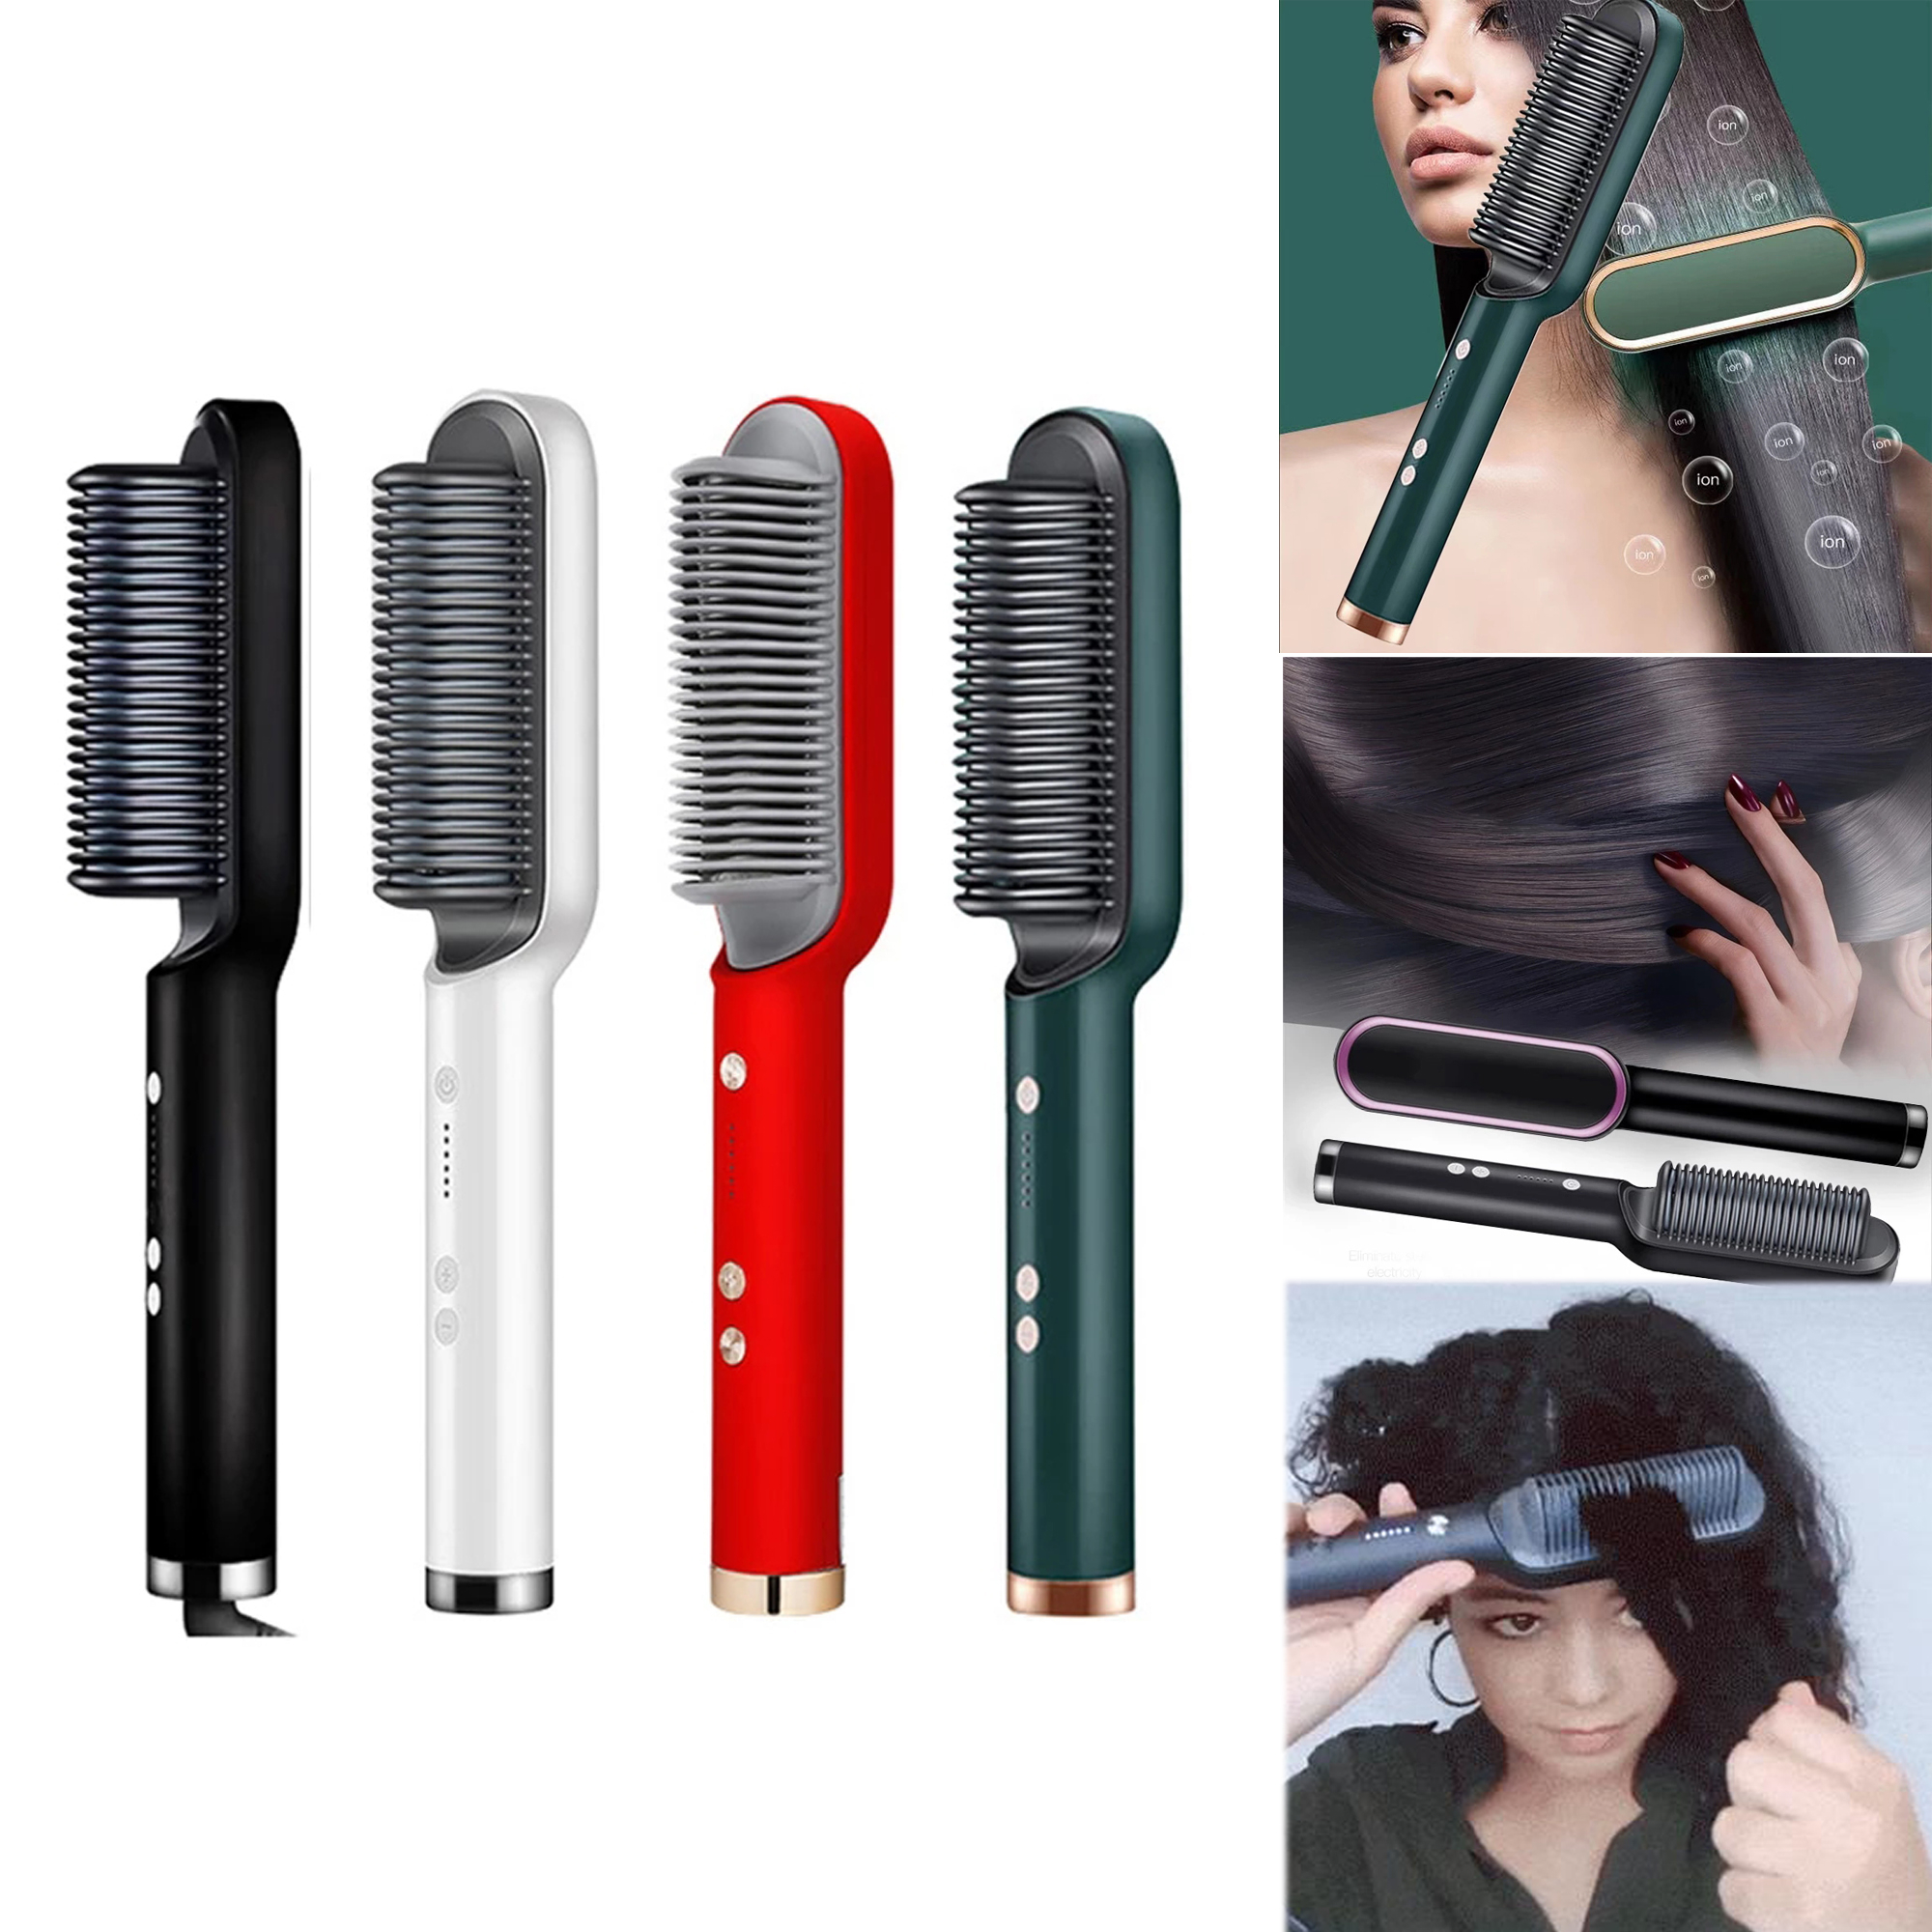 Professional Hair Straightener Brush Electric Straightening Brush Heated Straightener Comb Electric Hair Comb,BLACK - image 1 of 9